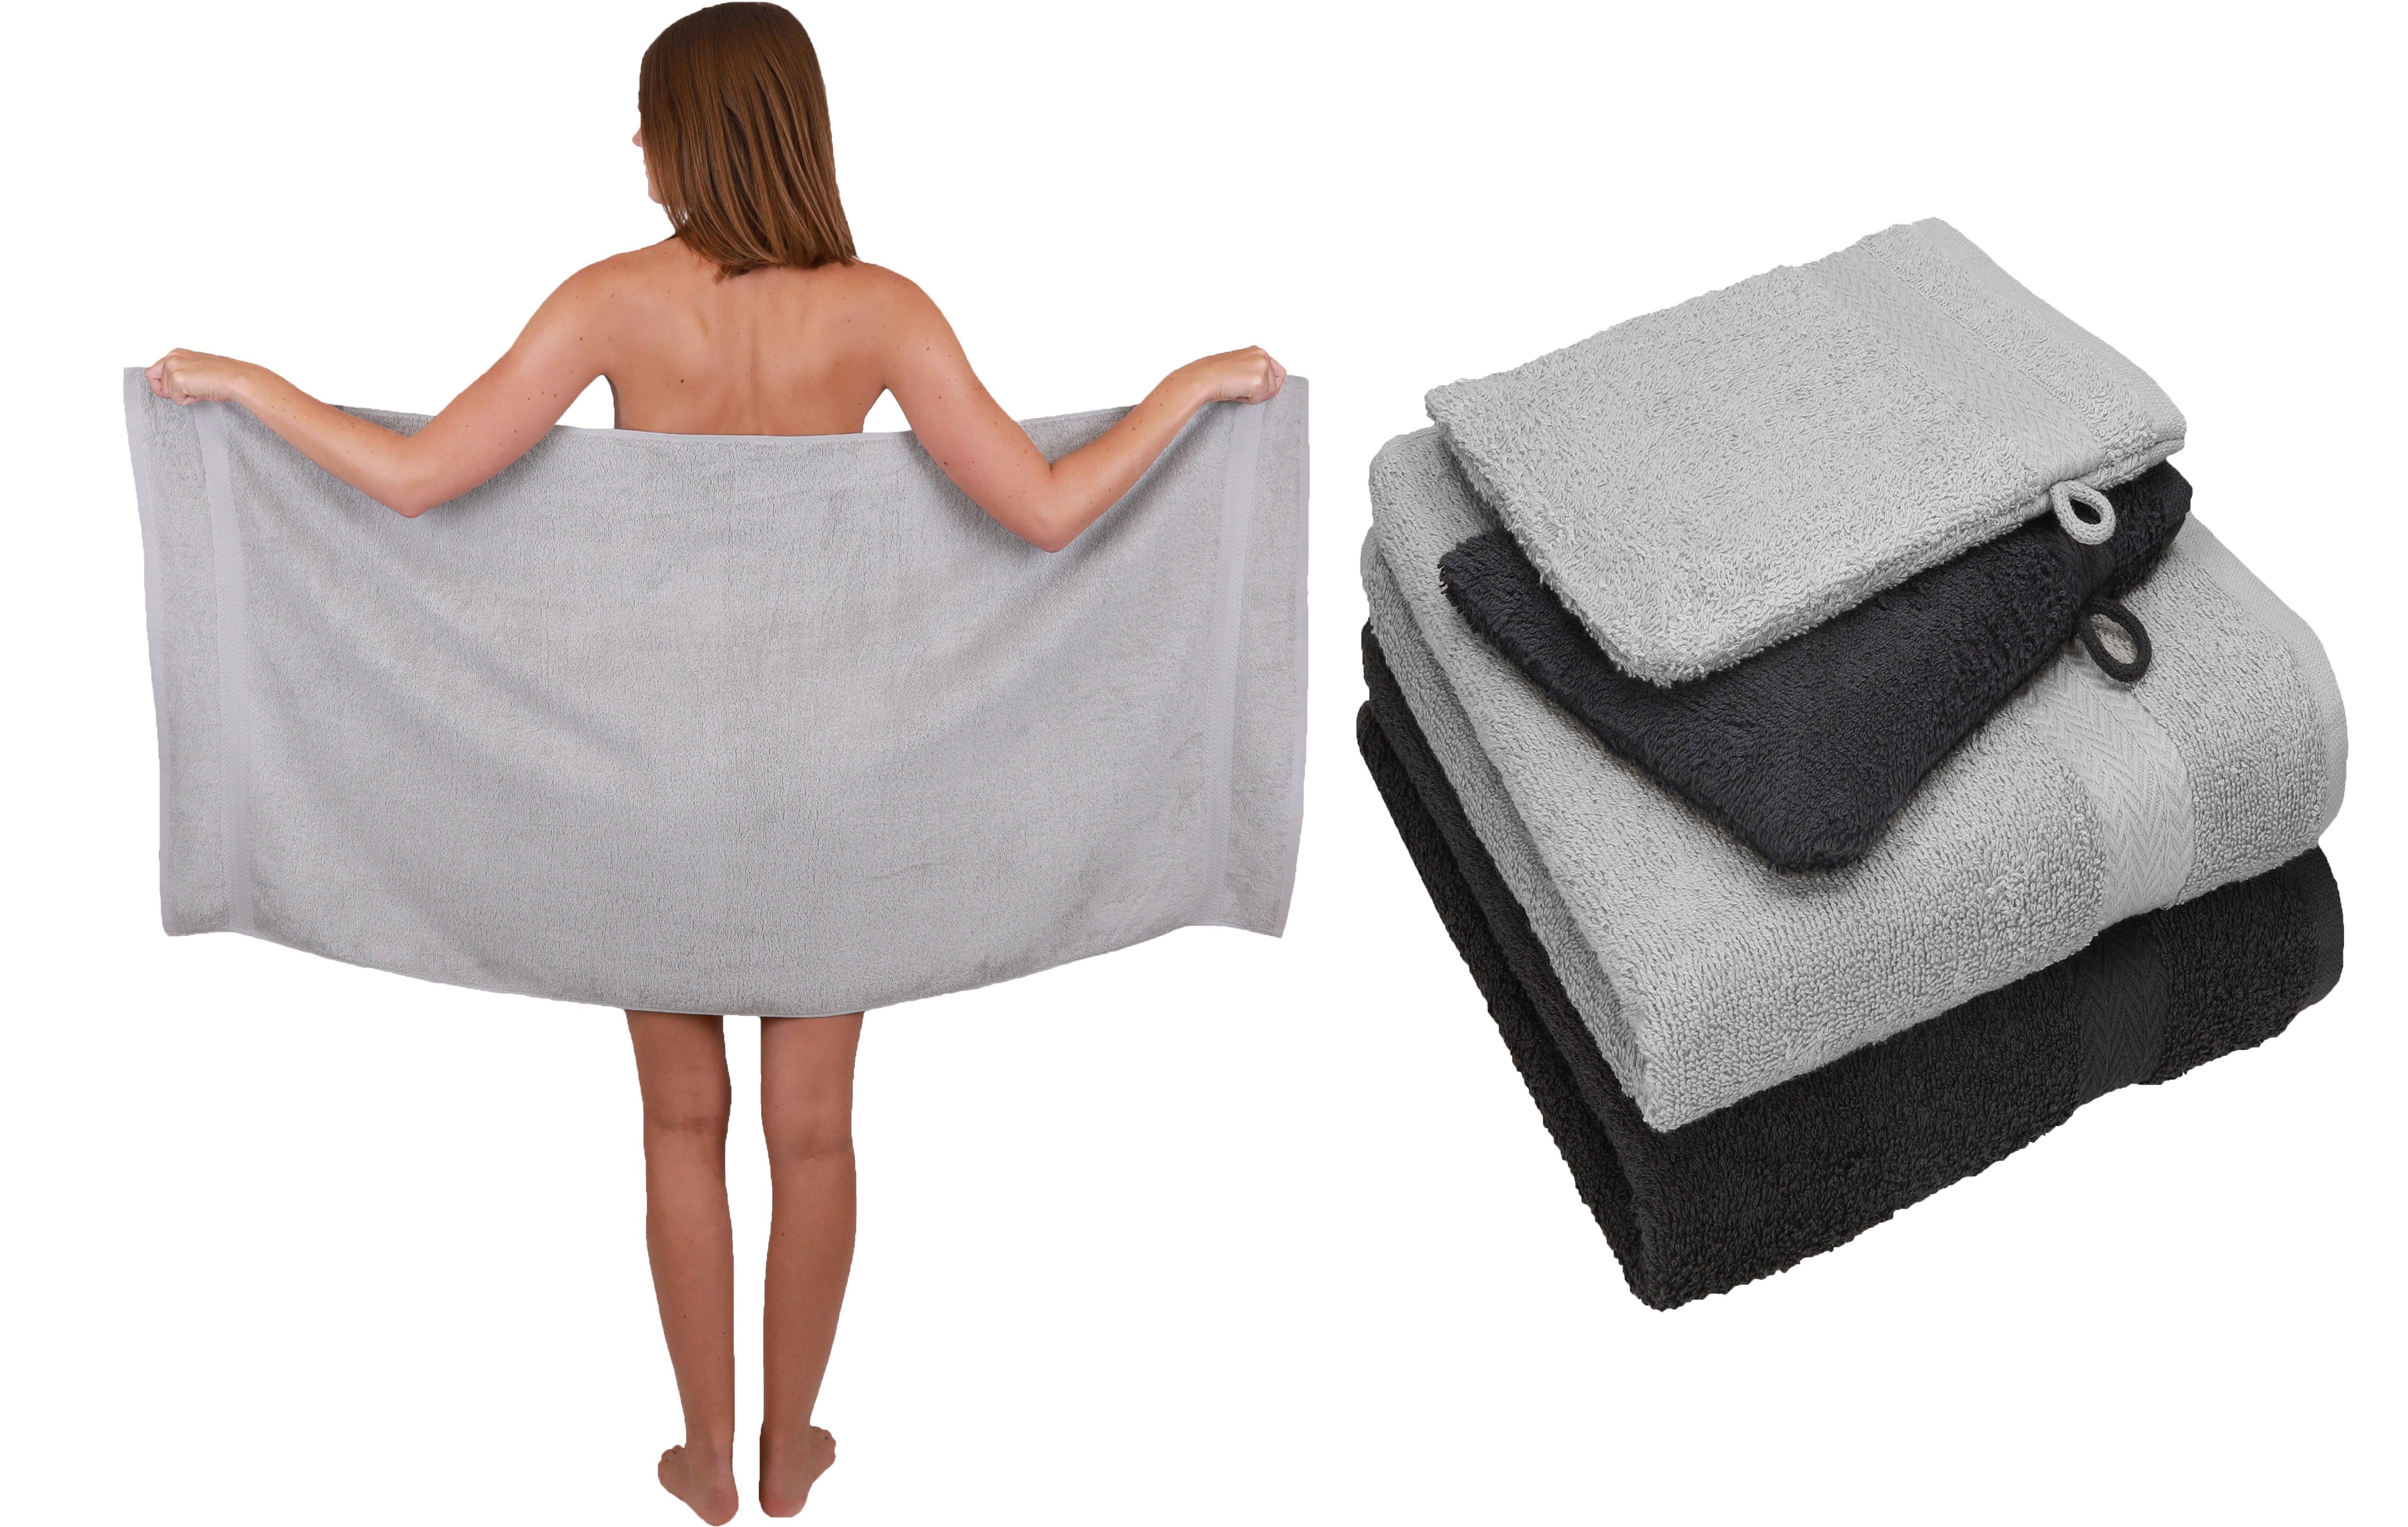 Betz Handtuch Set 5 TLG. Handtuch Set Single Pack 100% Baumwolle 1 Duschtuch 2 Handtücher 2 Waschhandschuhe, 100% Baumwolle silber grau-graphit grau | Handtuch-Sets